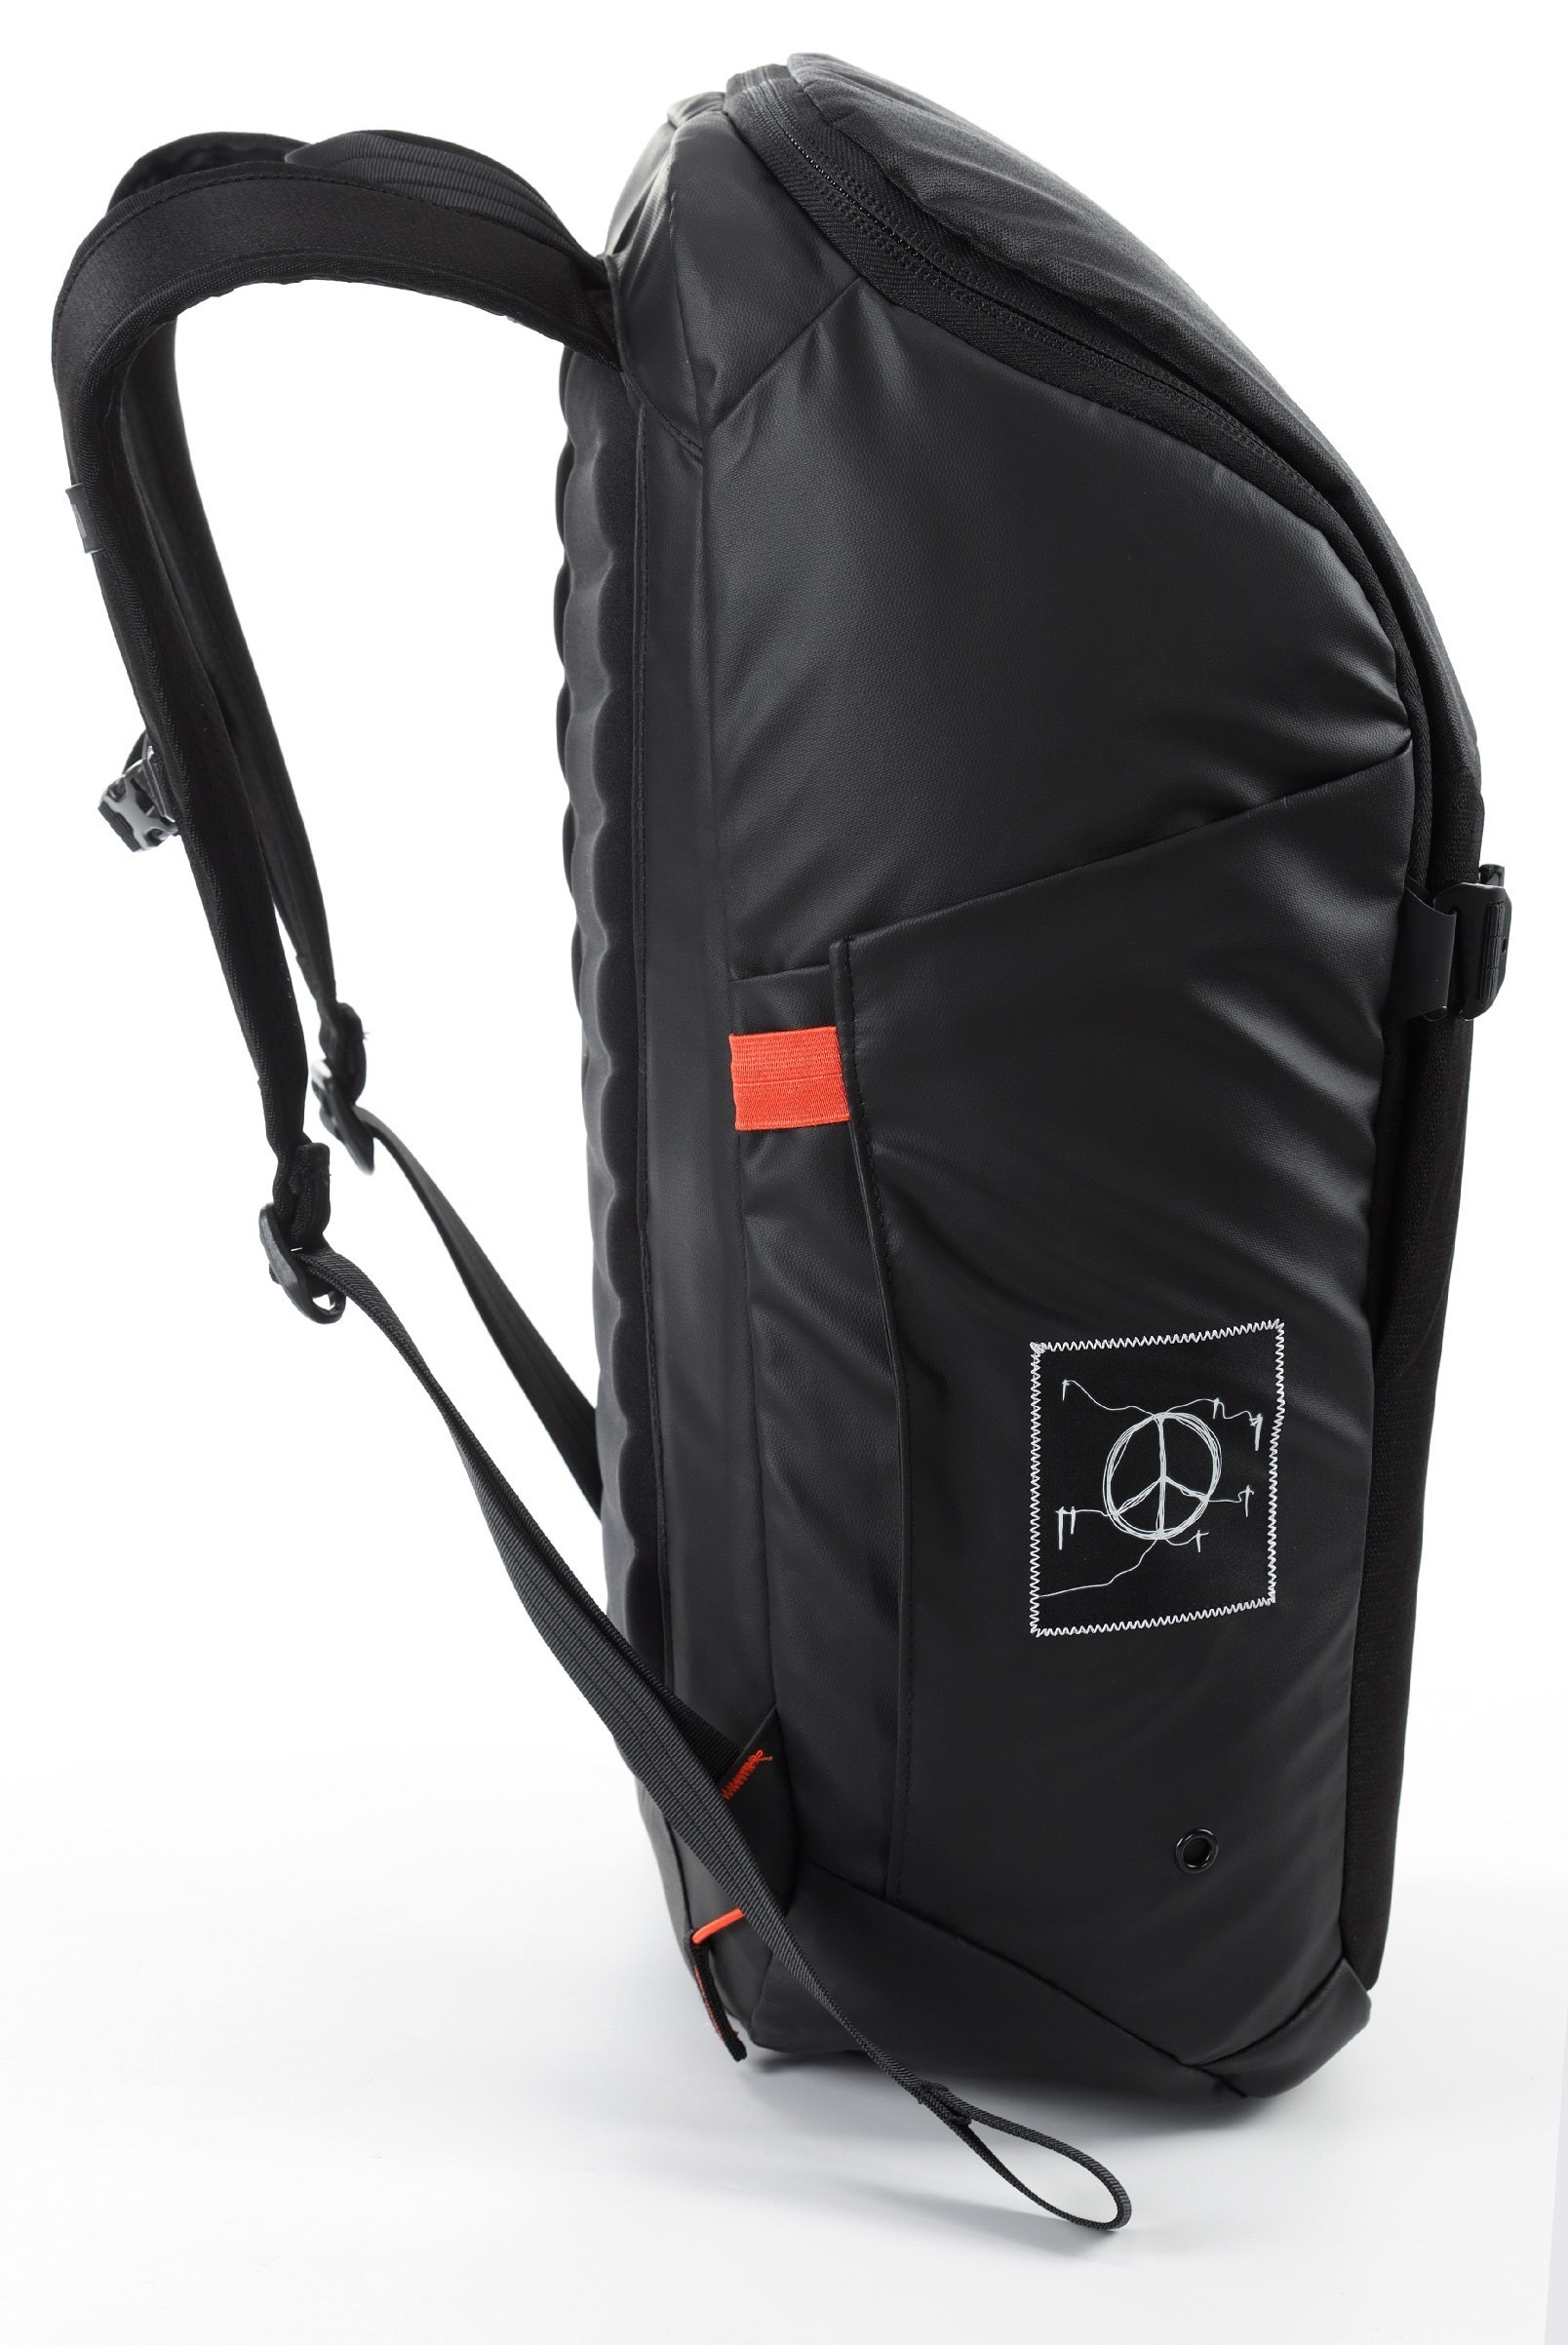 NITRO Laptoprucksack »NIKURO TRAVELER, fff black«, Reisetasche, Travel Bag, Alltagsrucksack, Daypack